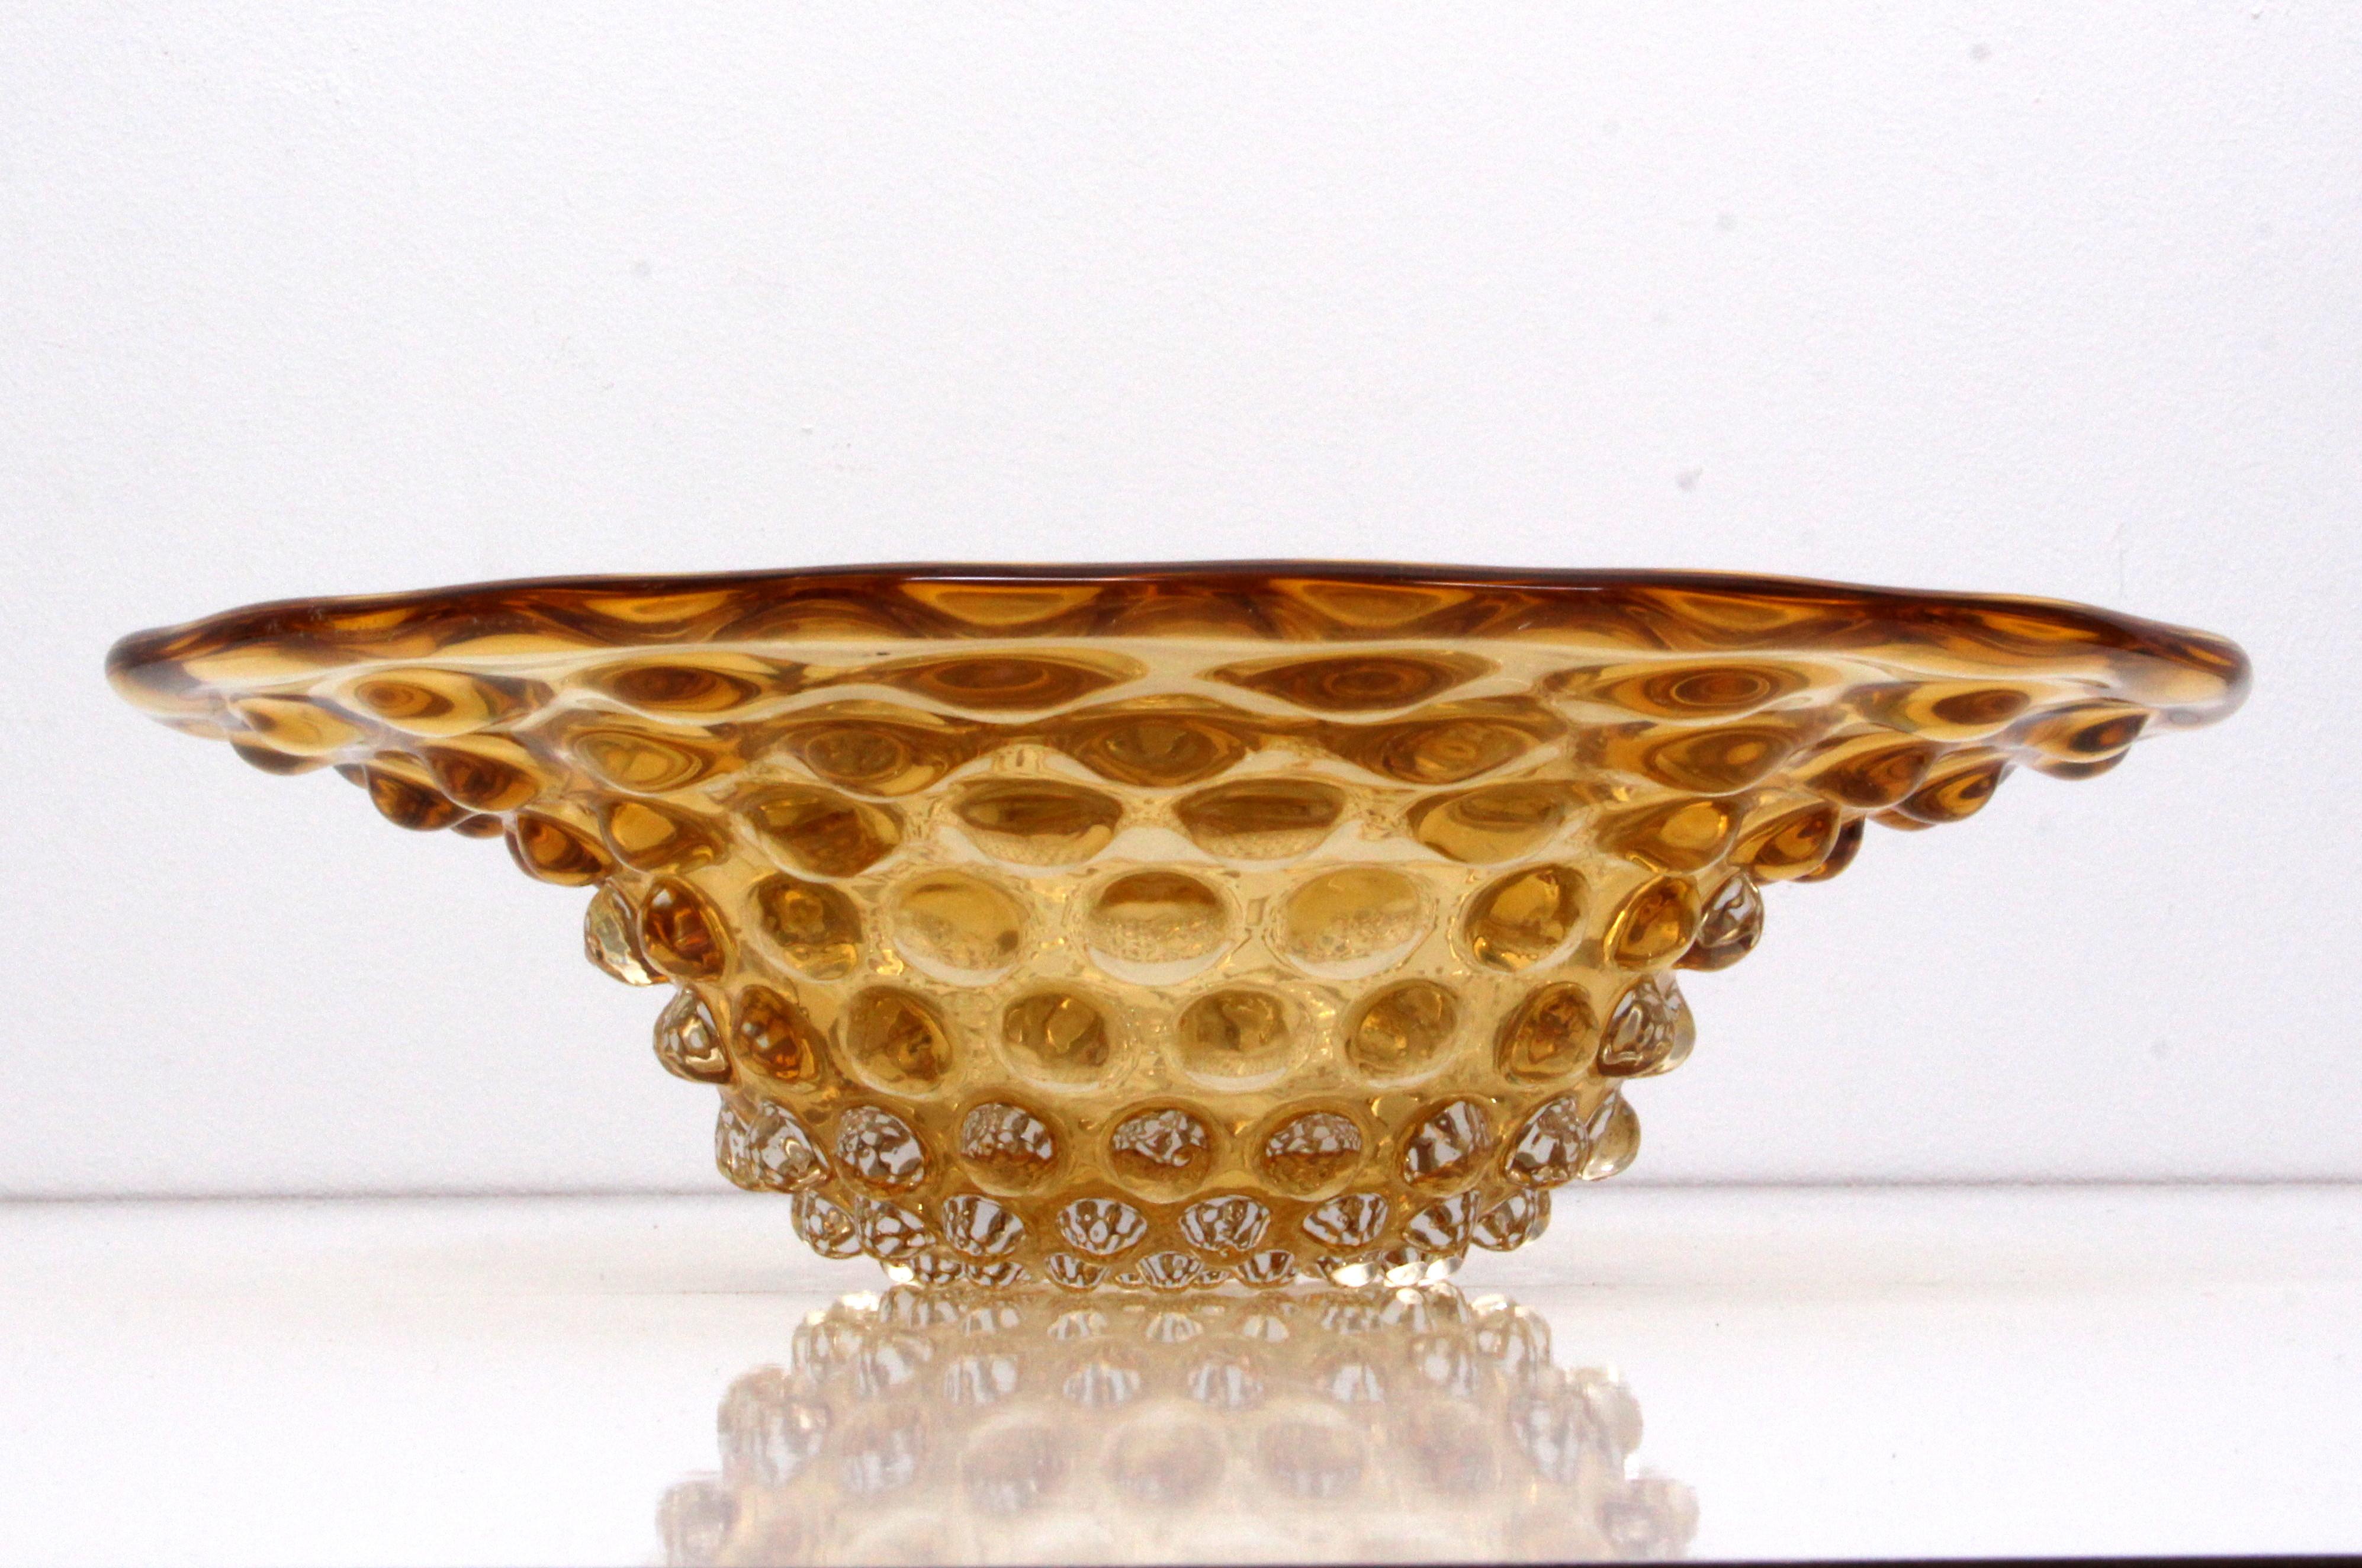  Barovier Seguso & Ferro Murano heavy Art Glass Bowl Honey Amber Italy  1940s  For Sale 4